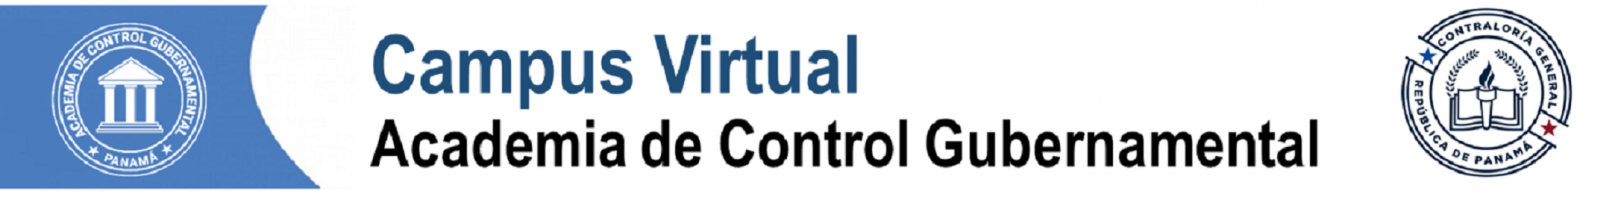 Campus Virtual Academia de Control Gubernamental